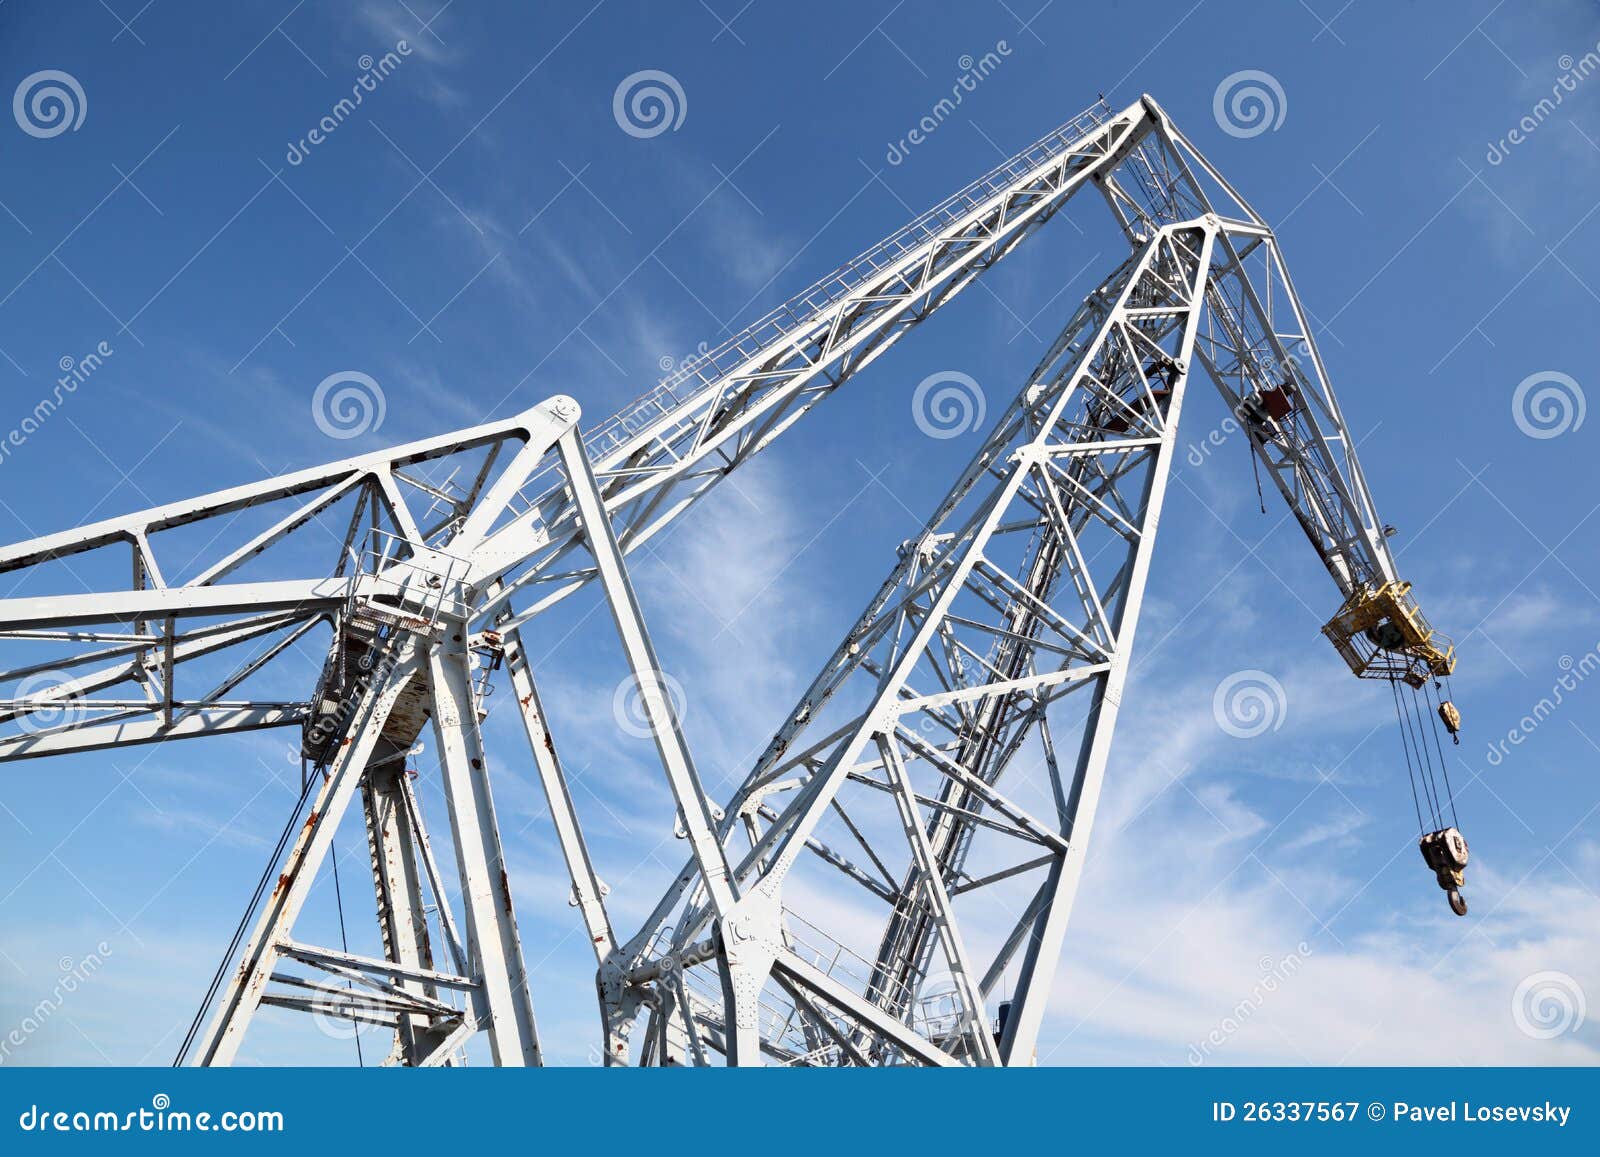 big hoisting crane with hook